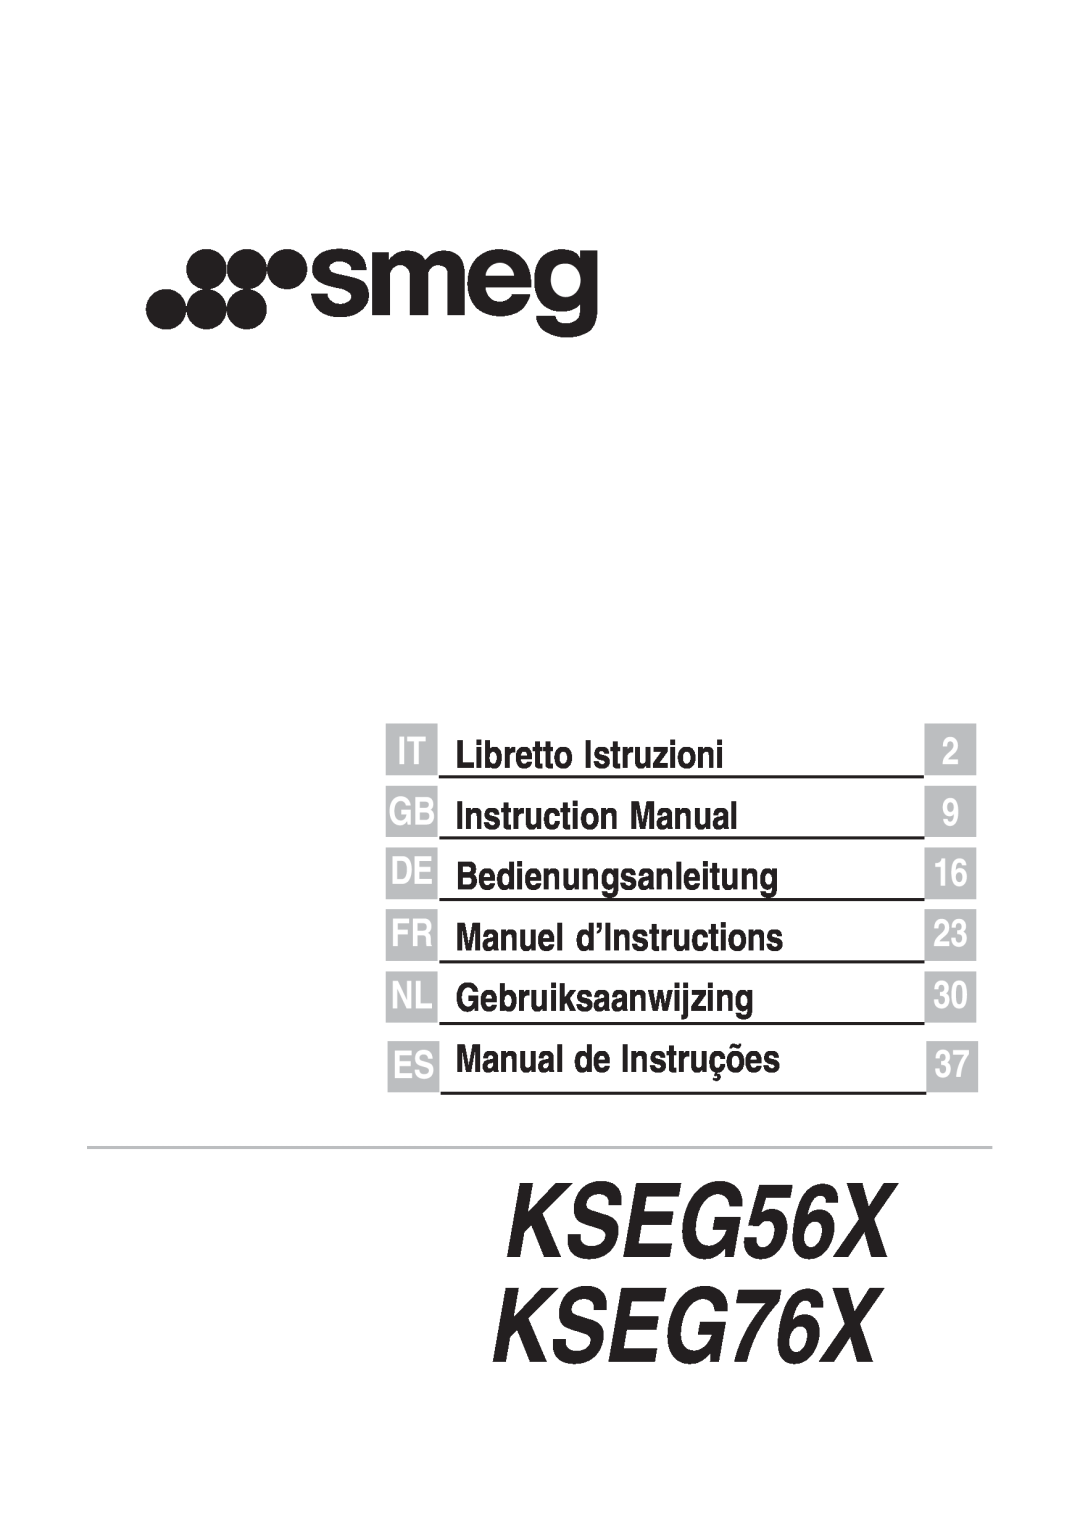 Smeg KSEG76X instruction manual Libretto Istruzioni, Bedienungsanleitung, Manuel d’Instructions, Gebruiksaanwijzing, Fr Nl 